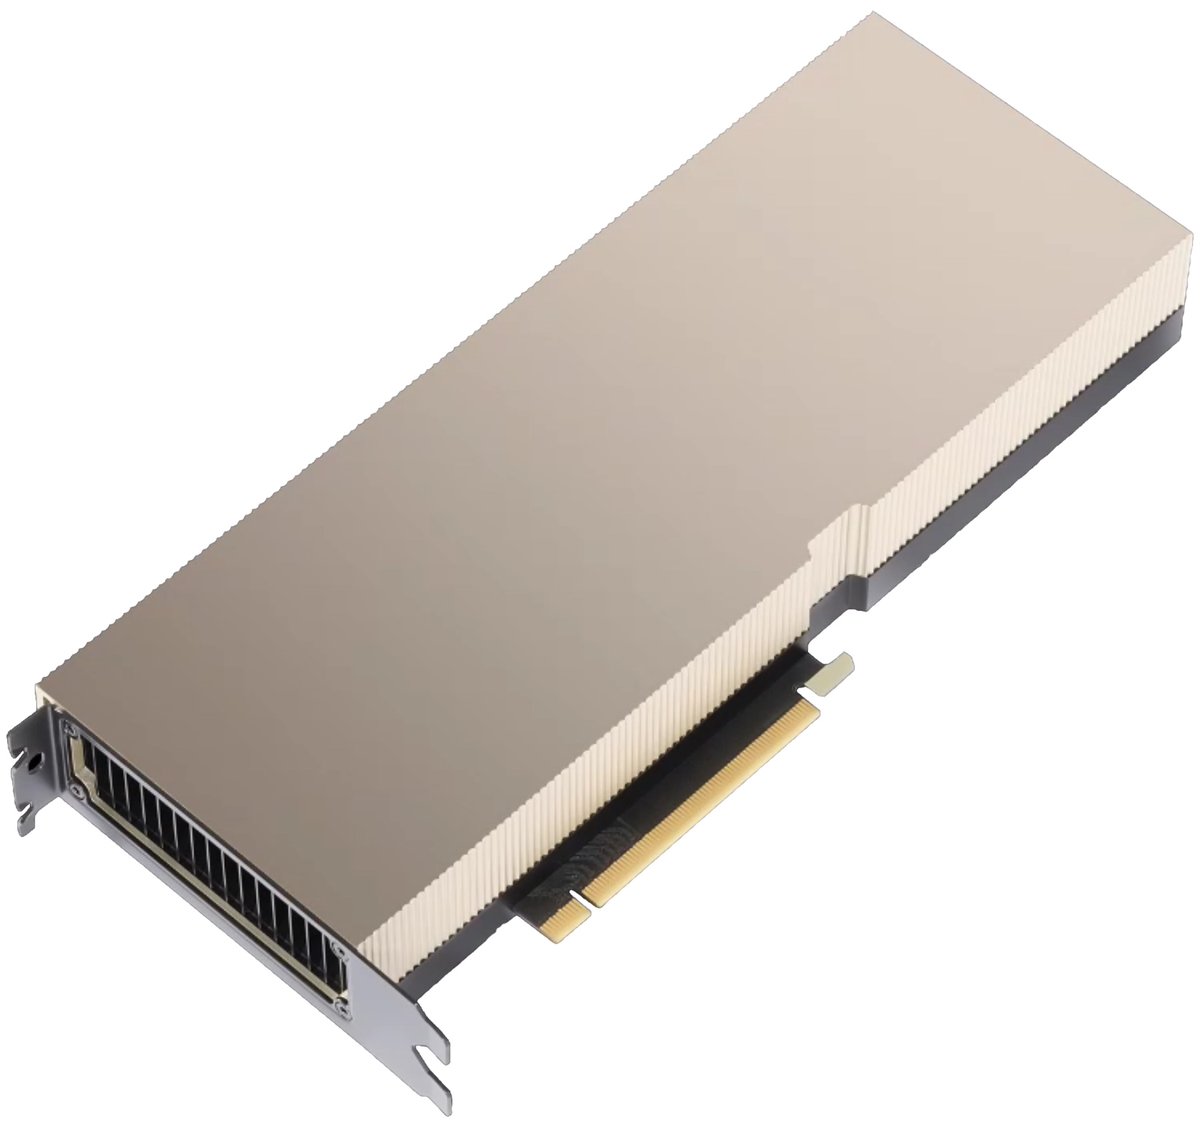 Nvidia 80GB GPU-NVA100-80-NC Tesla GDDR4 1065 MH/1512 MHz Video Card